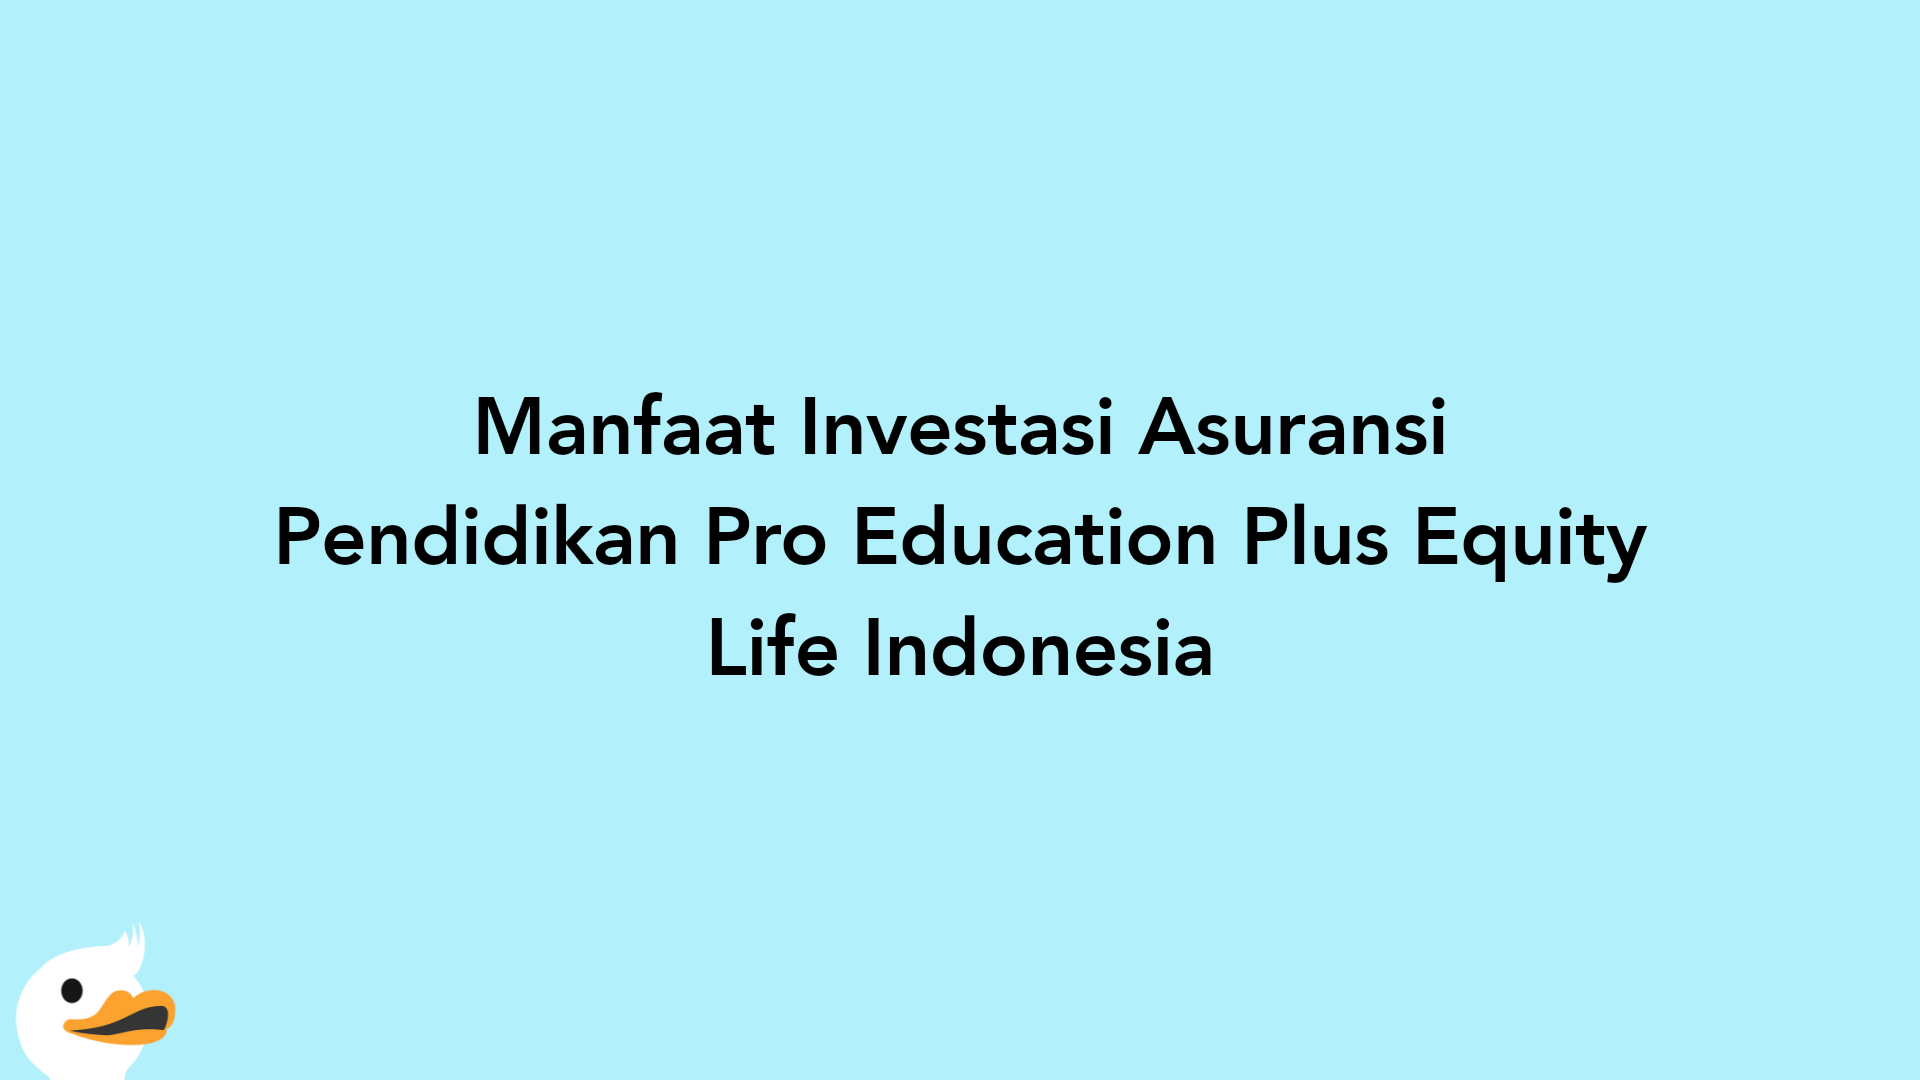 Manfaat Investasi Asuransi Pendidikan Pro Education Plus Equity Life Indonesia